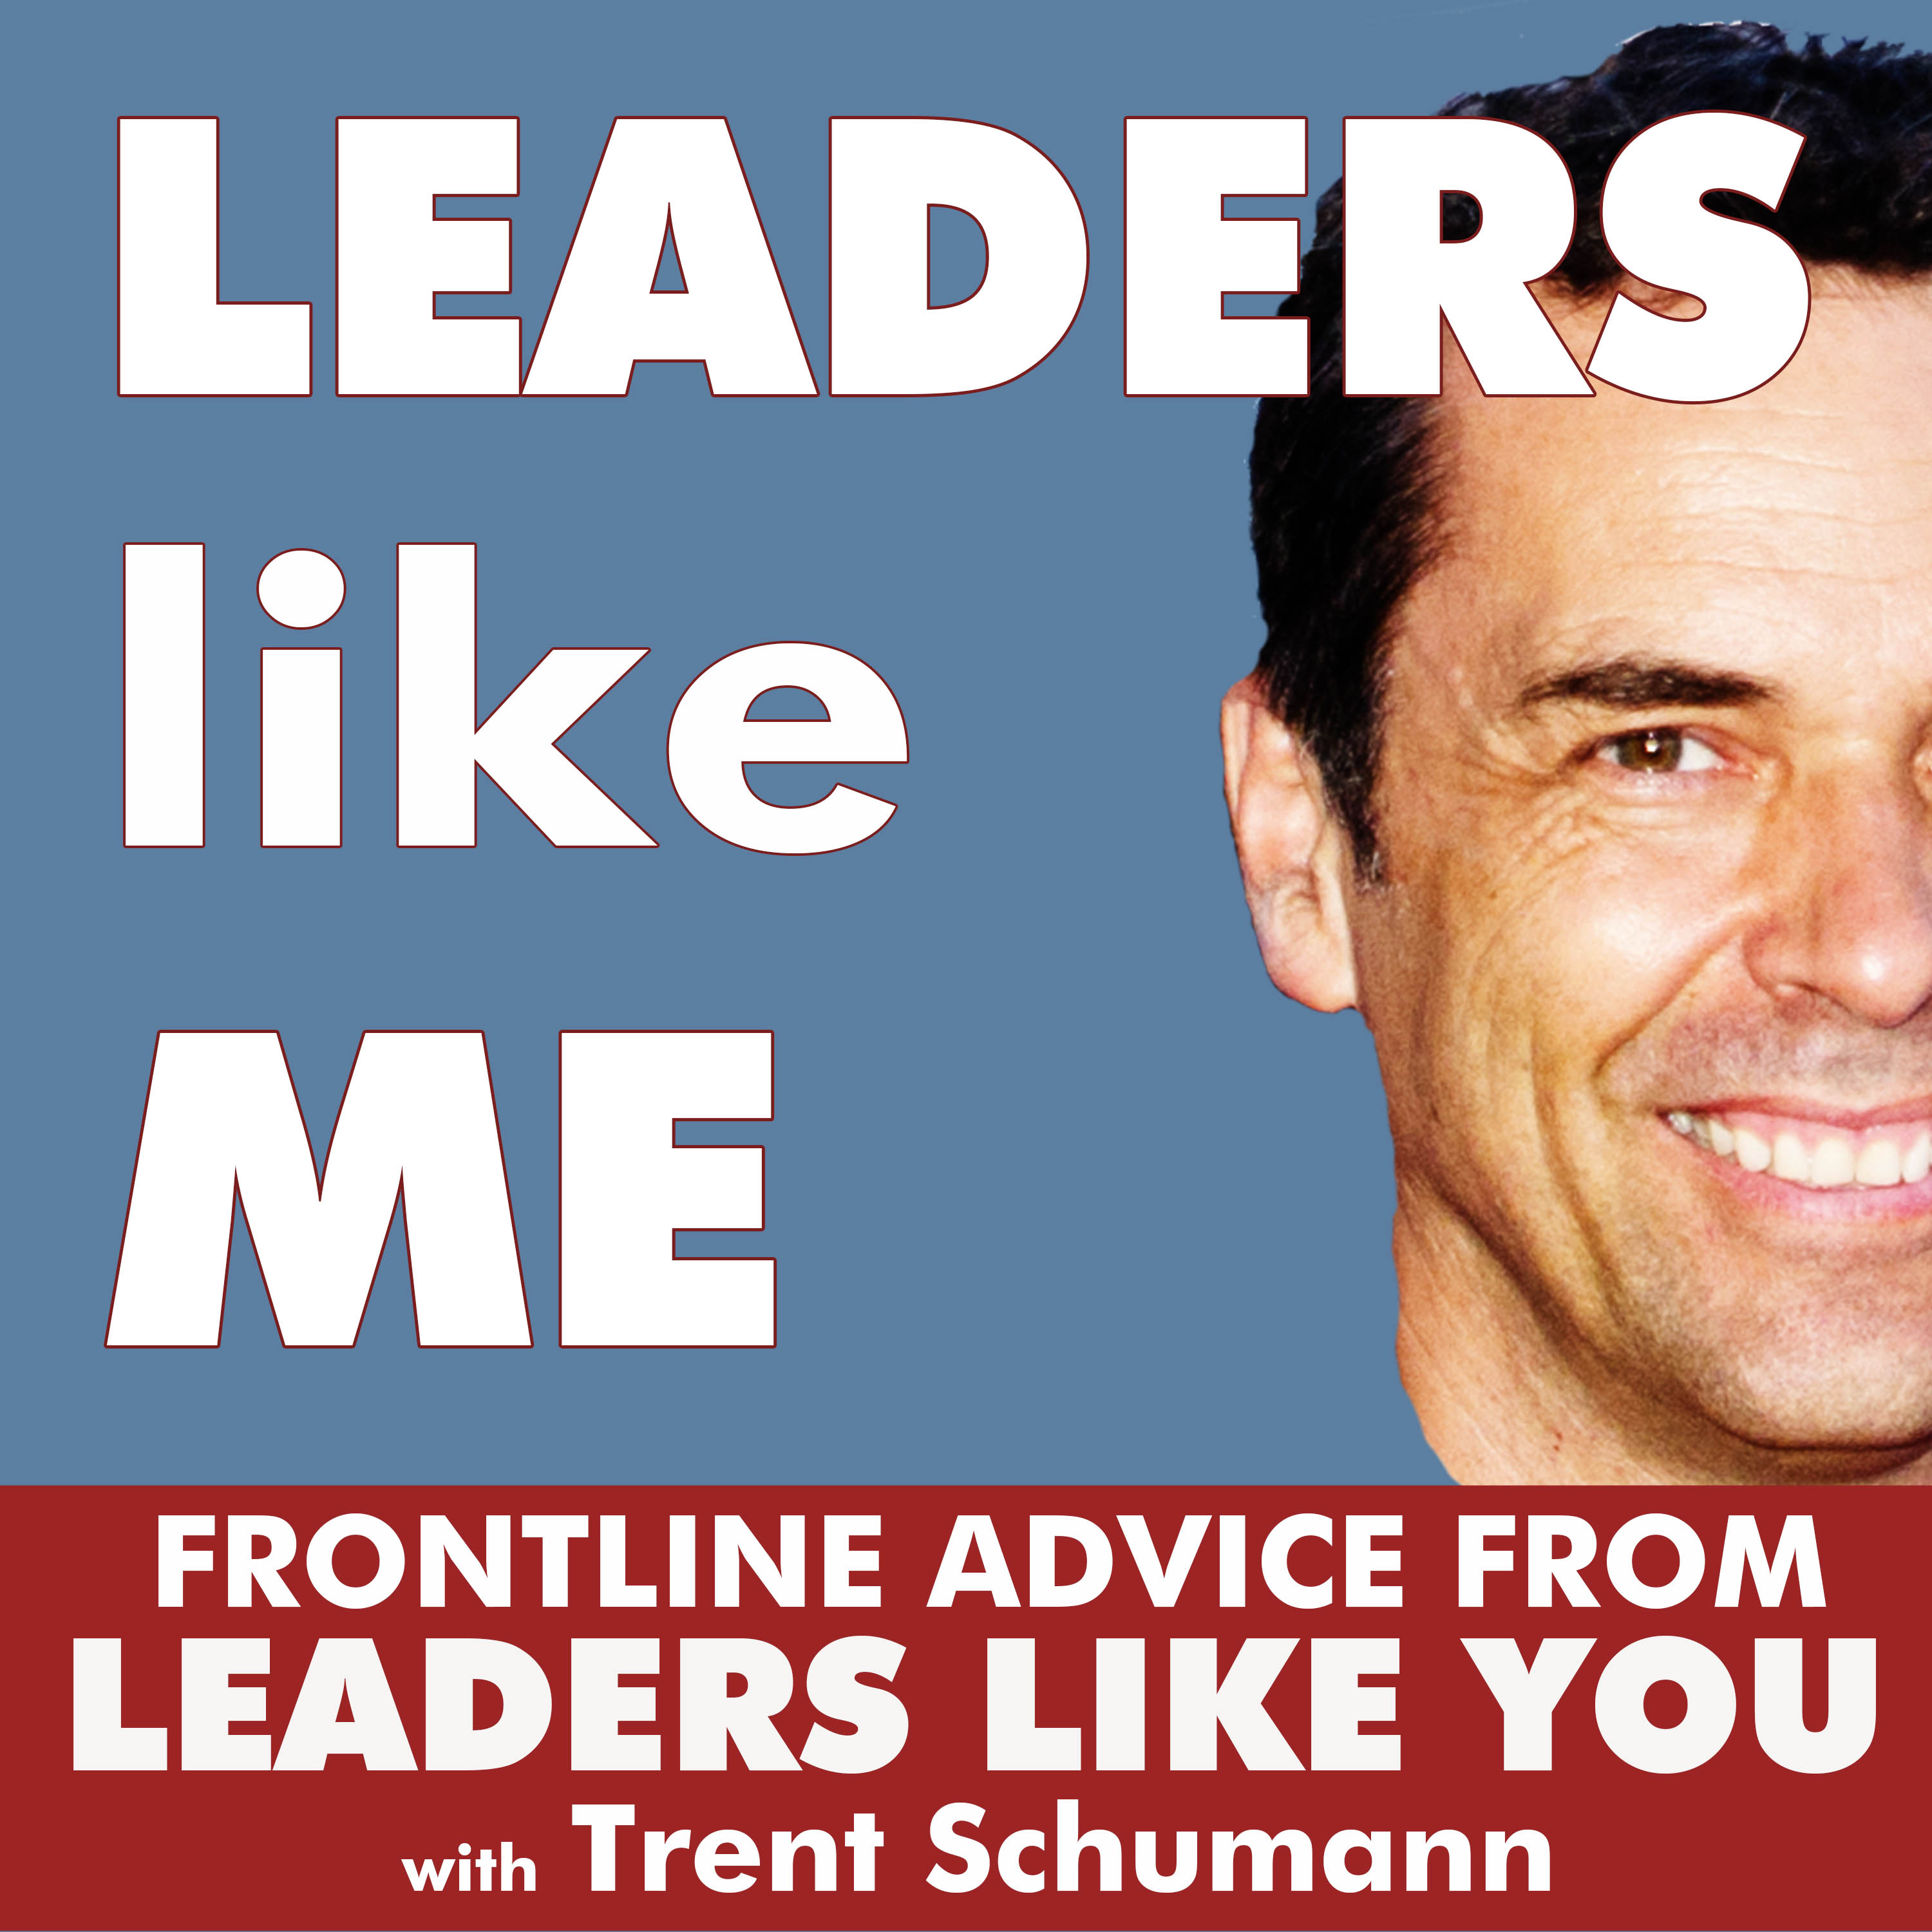 LEADERS like ME: Leadership / Management / Teamwork. Frontline wisdom from leaders just like you.